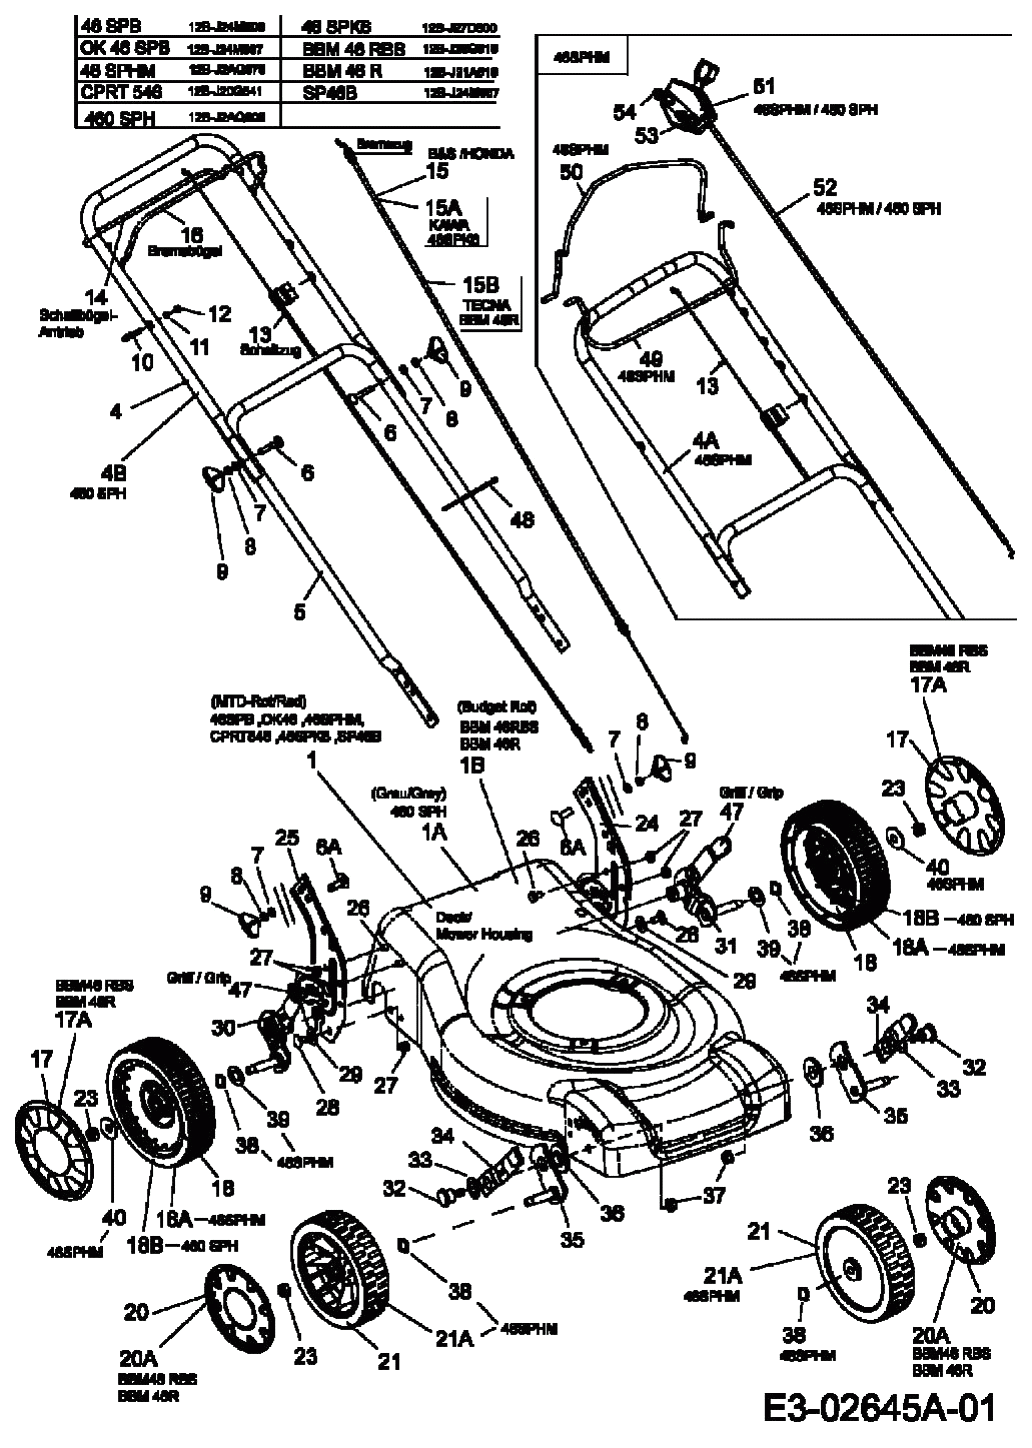 MTD Артикул 12B-J24M600 (год выпуска 2006). Ручка, колеса, регулятор высоты реза